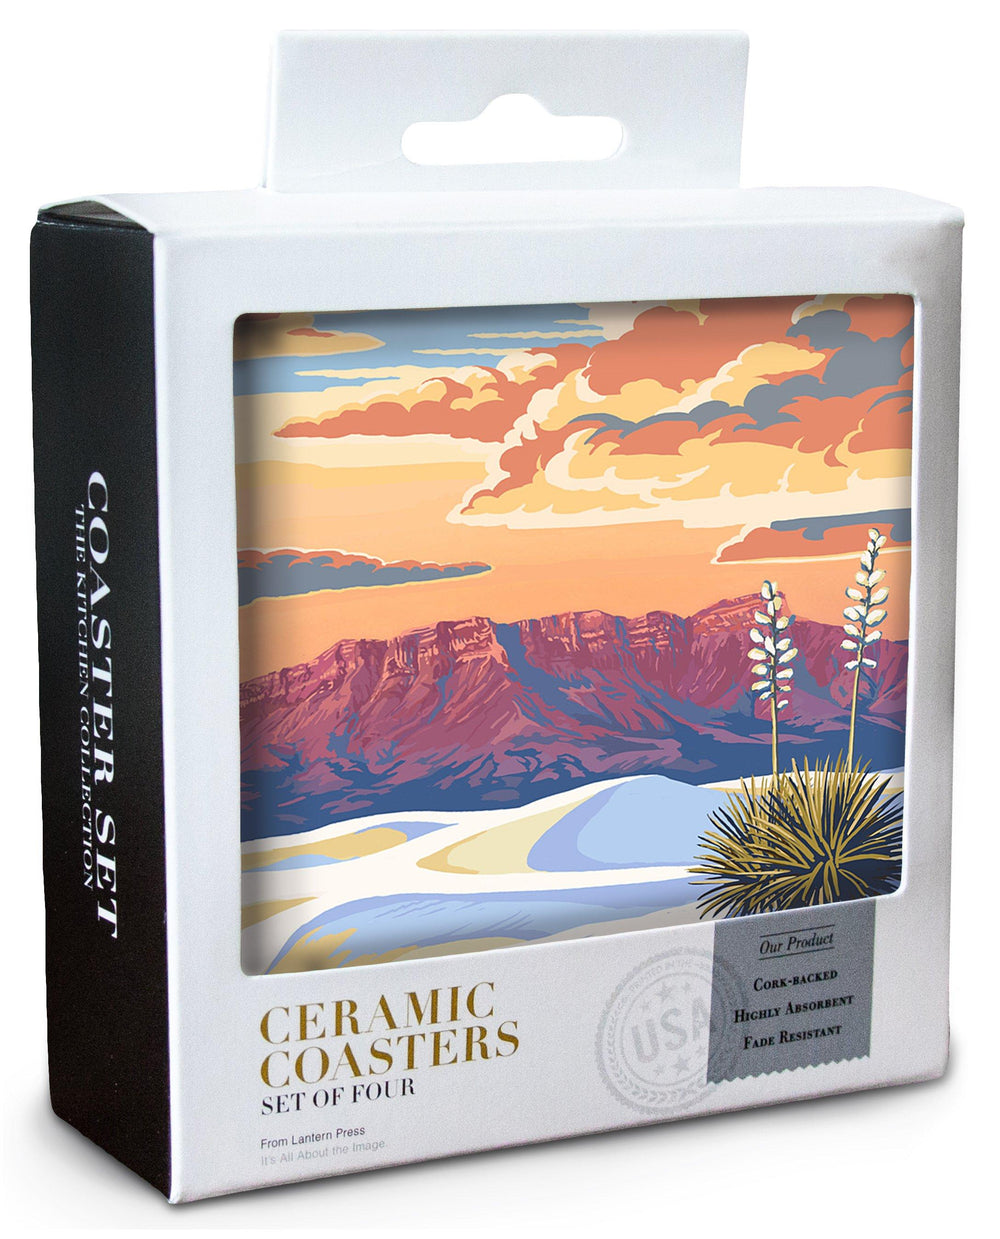 White Sands National Park, New Mexico, Sunset Scene, Lantern Press Artwork, Coaster Set Coasters Lantern Press 